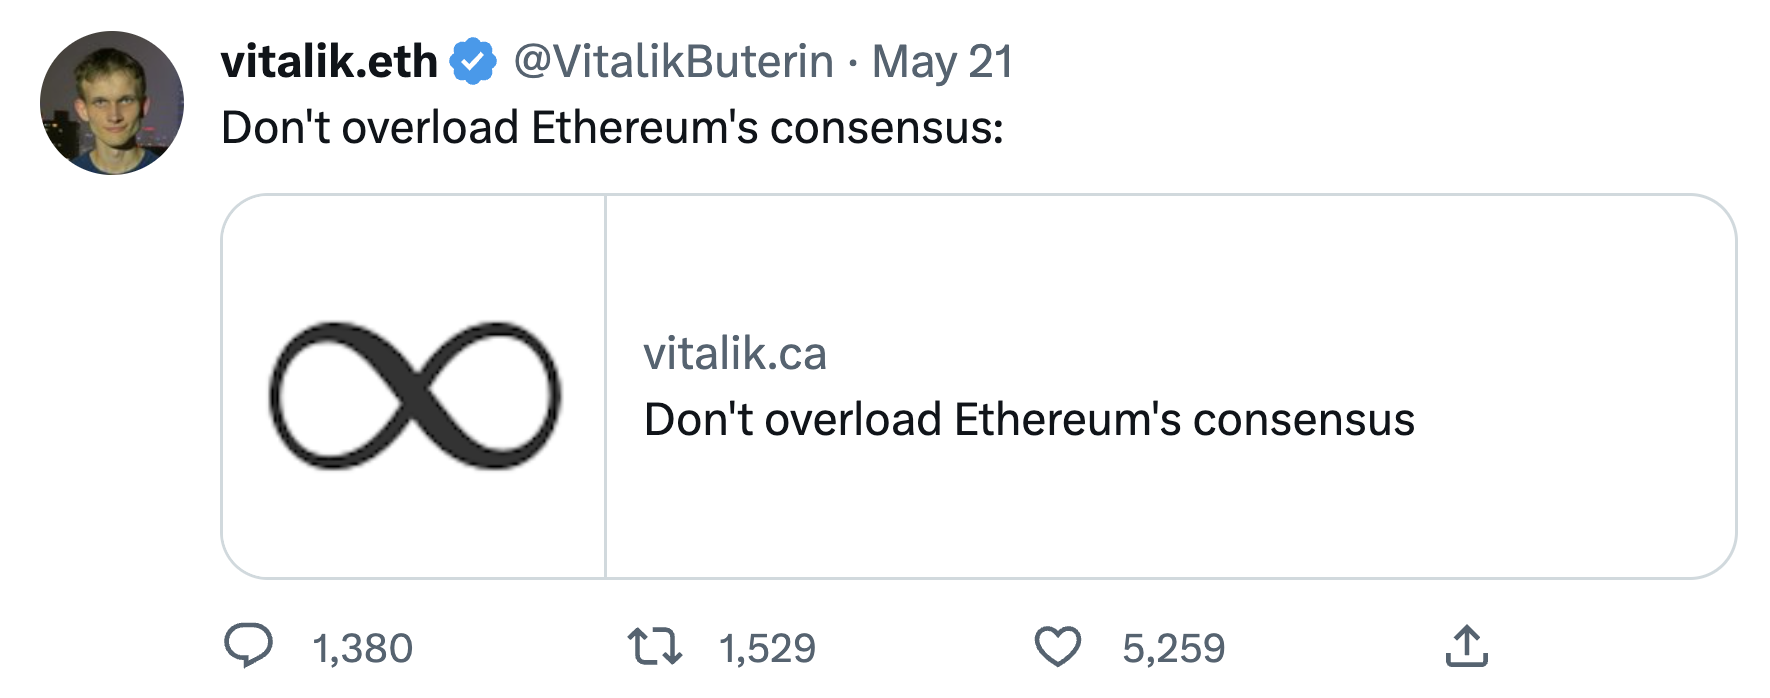 Vitalik's May 21 tweet